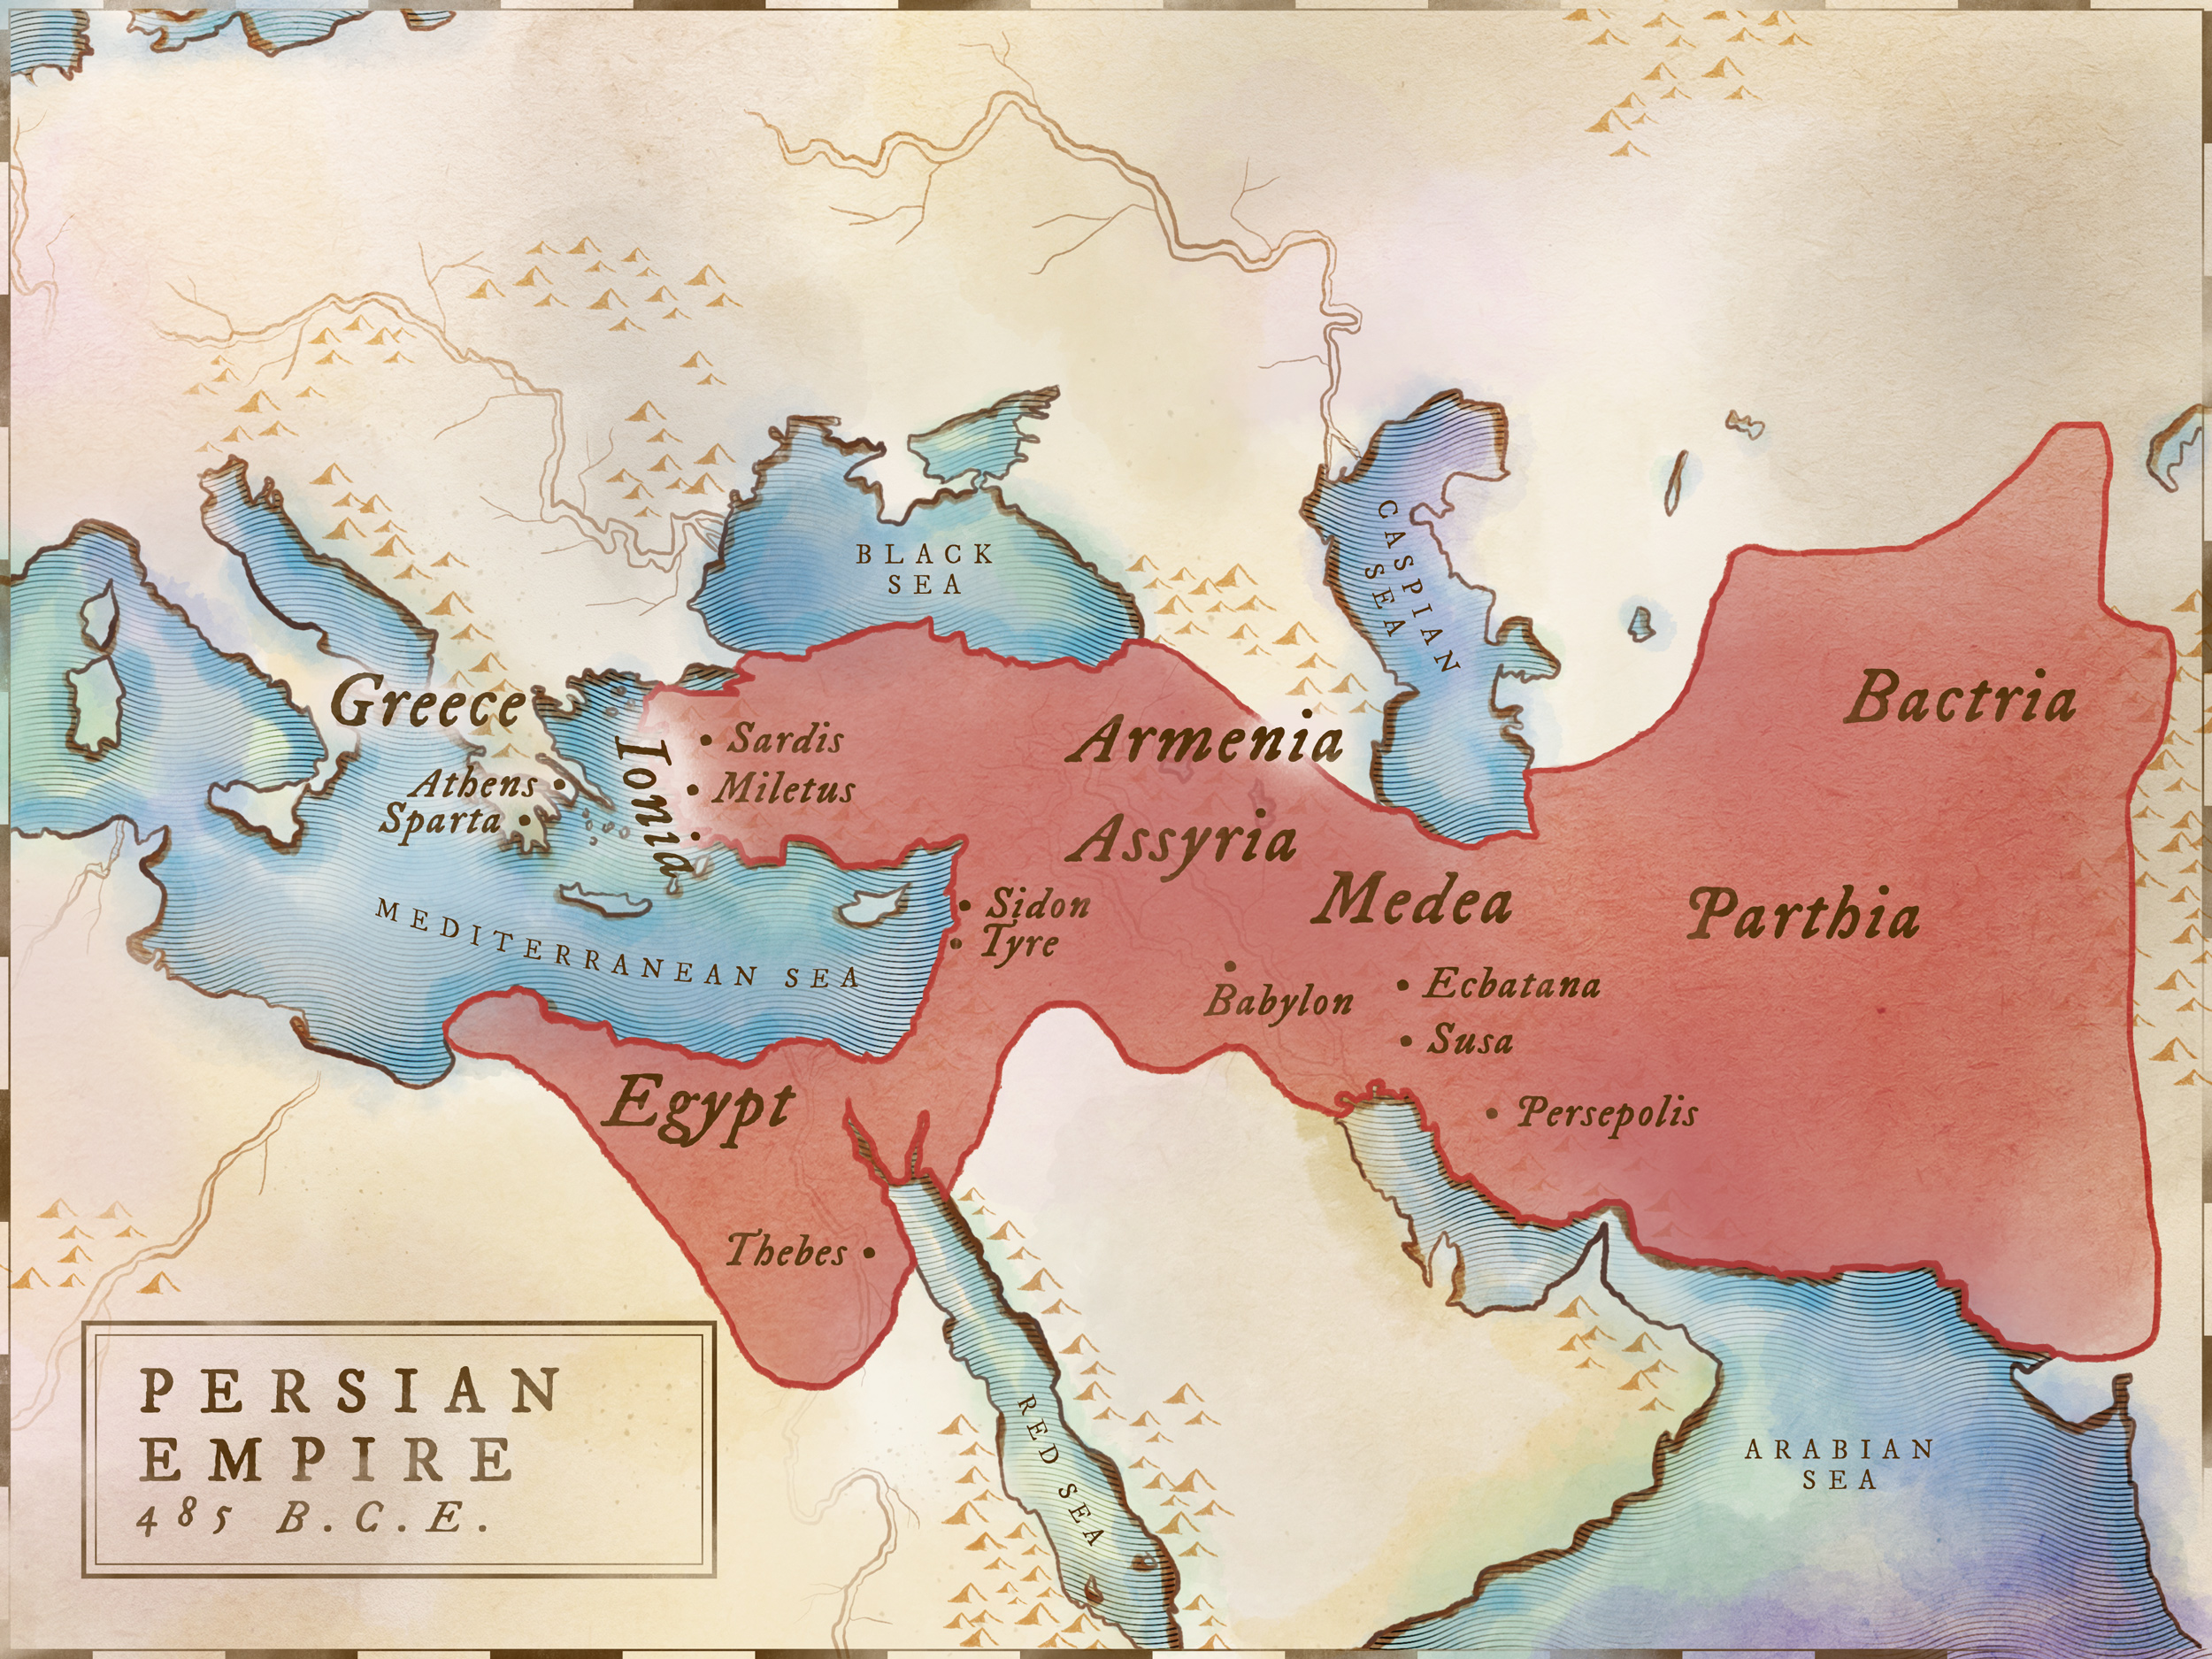 The Persian Empire at its apex.